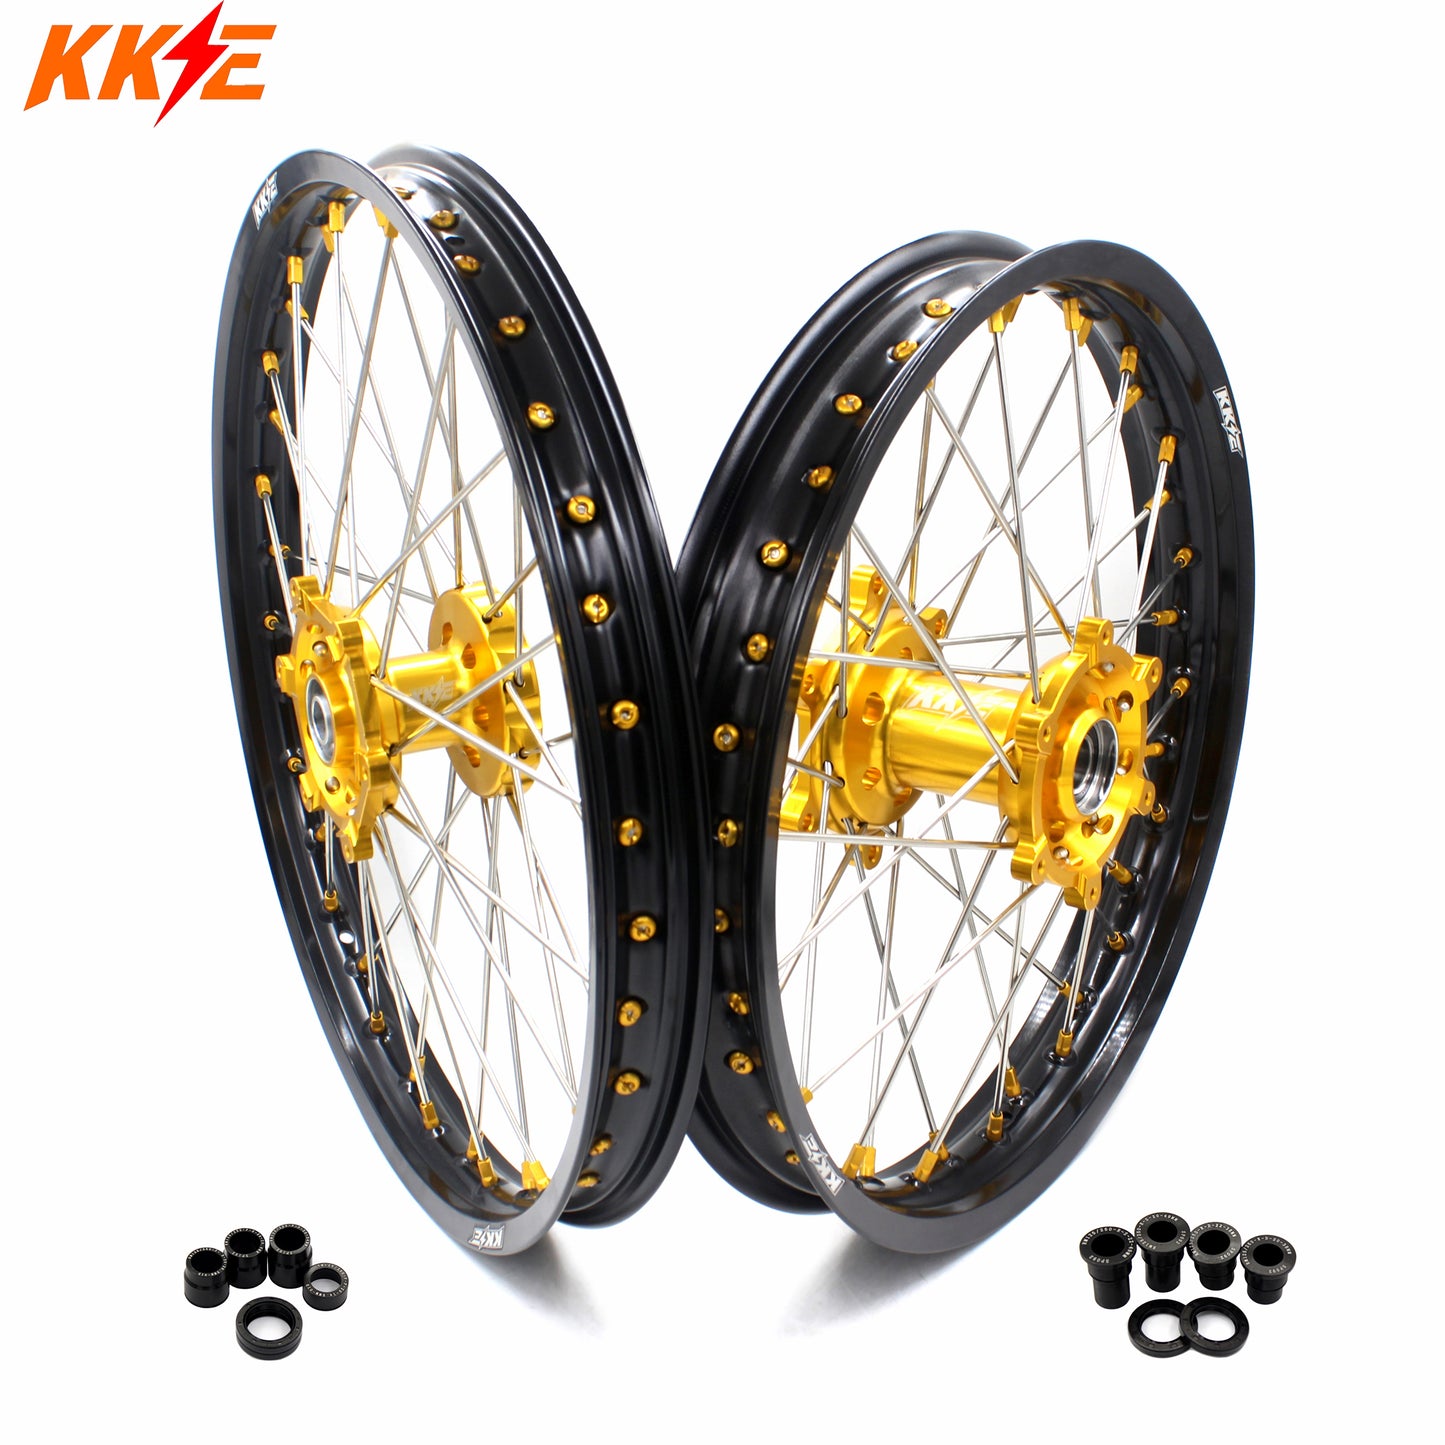 KKE 21 & 19 MX Dirt Bikes Rims For SUZUKI RM125 RM250 1996-2000 Gold Nipples